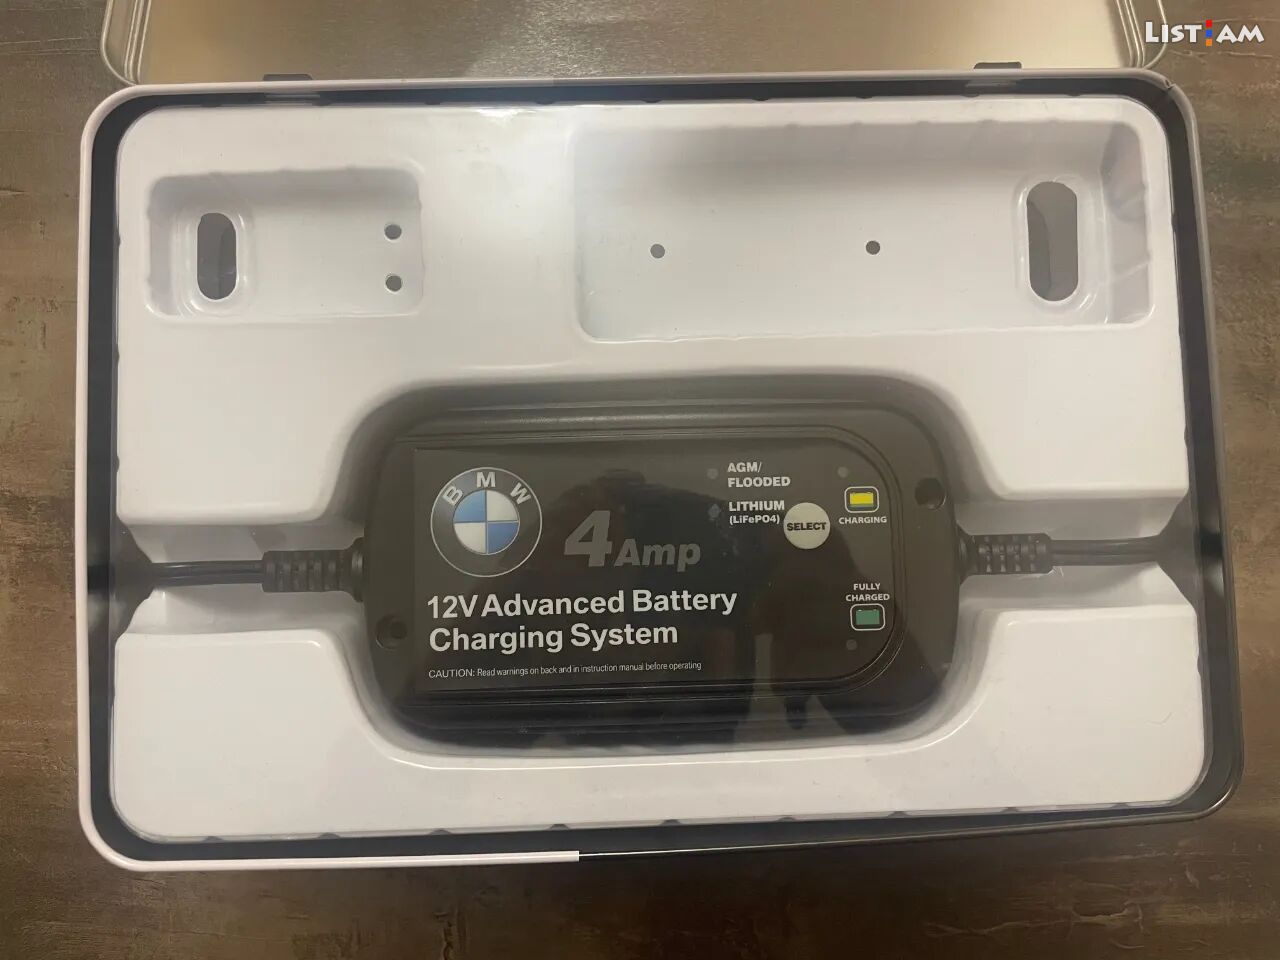 BMW 4Amp Advanced